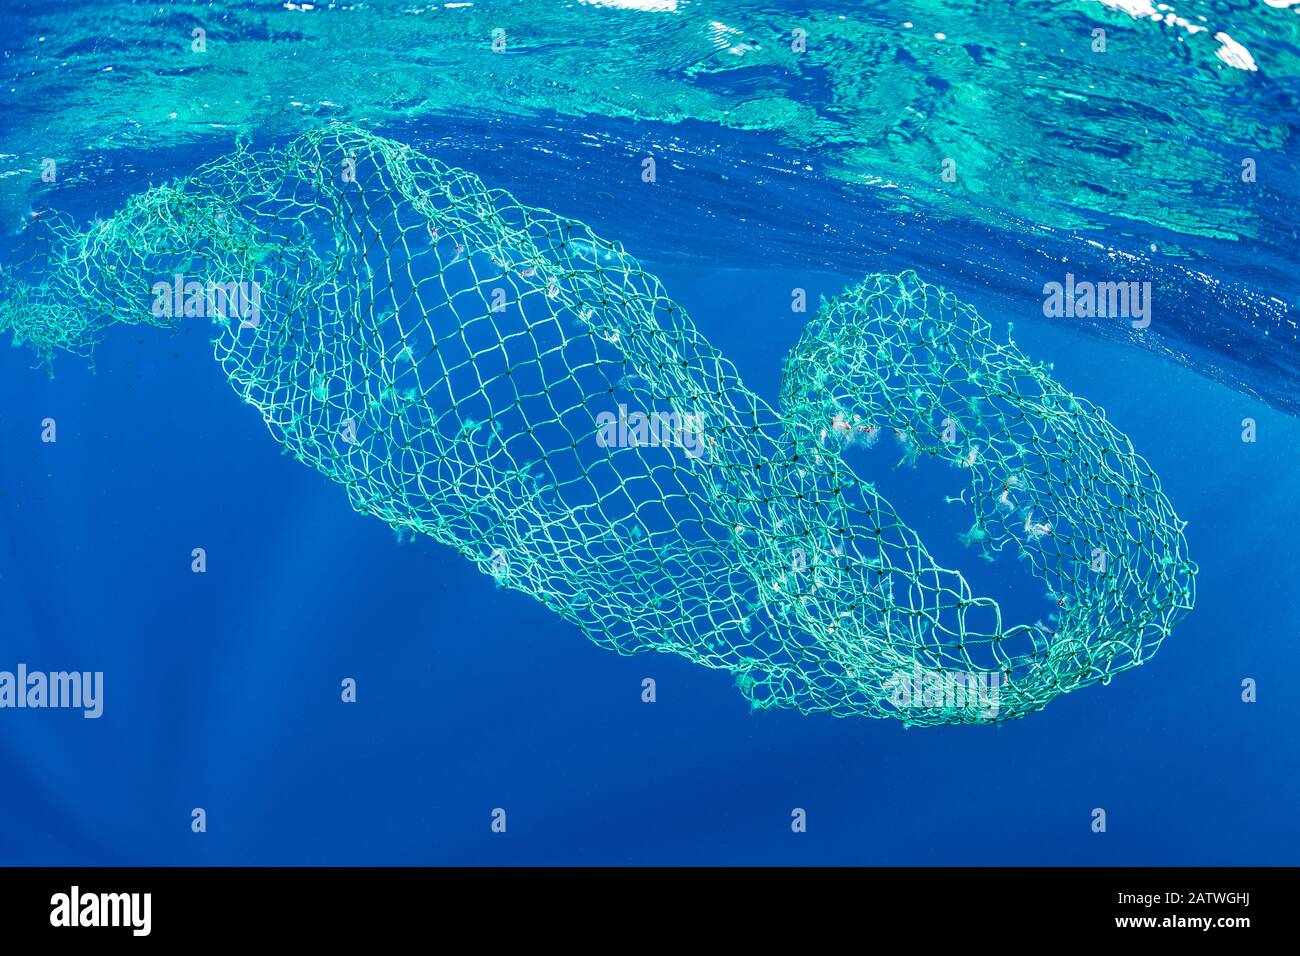 Schwimmendes, verfallenes Netz im Ozean, Dominica, Karibik, Atlantik. Stockfoto